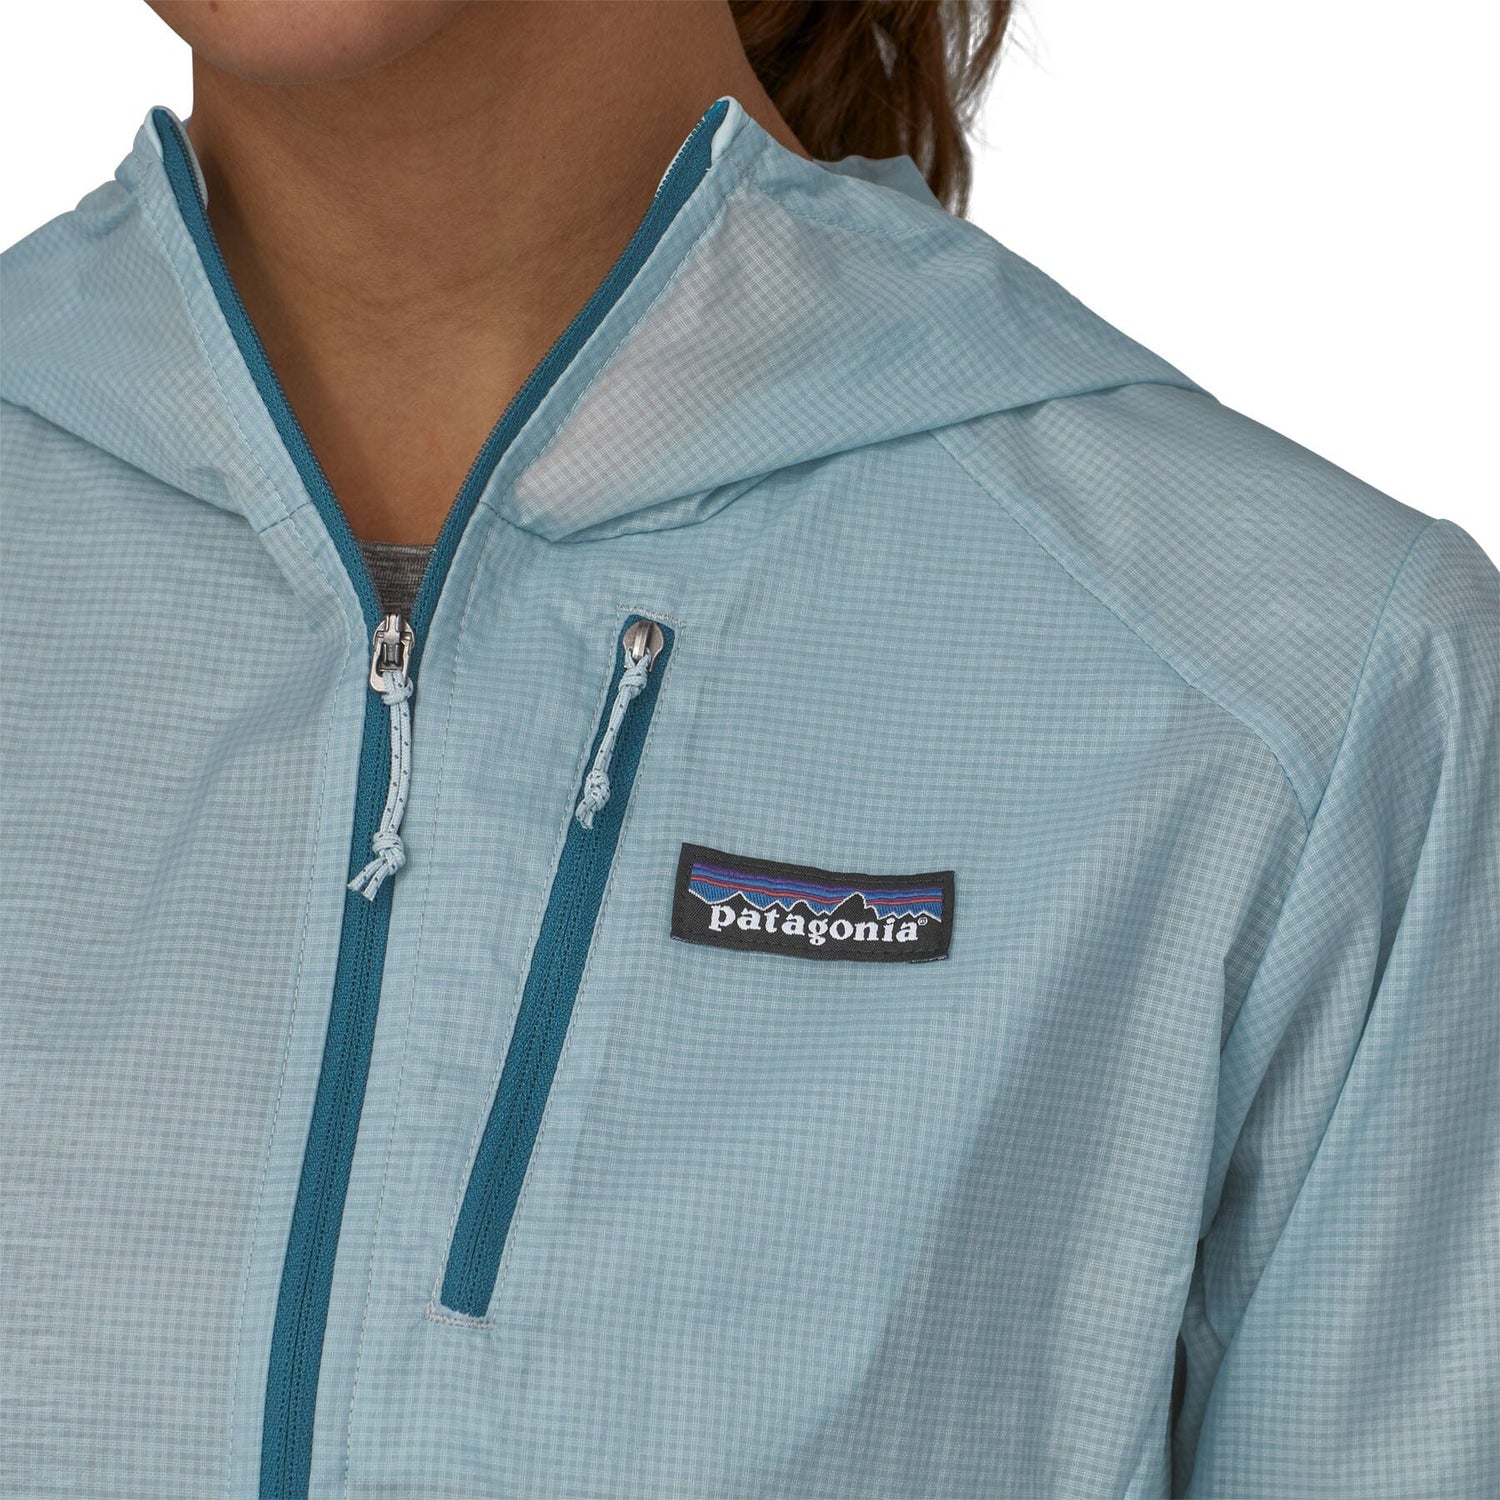 Patagonia - W's Houdini® Jacket - 100% Recycled Nylon - Weekendbee - sustainable sportswear